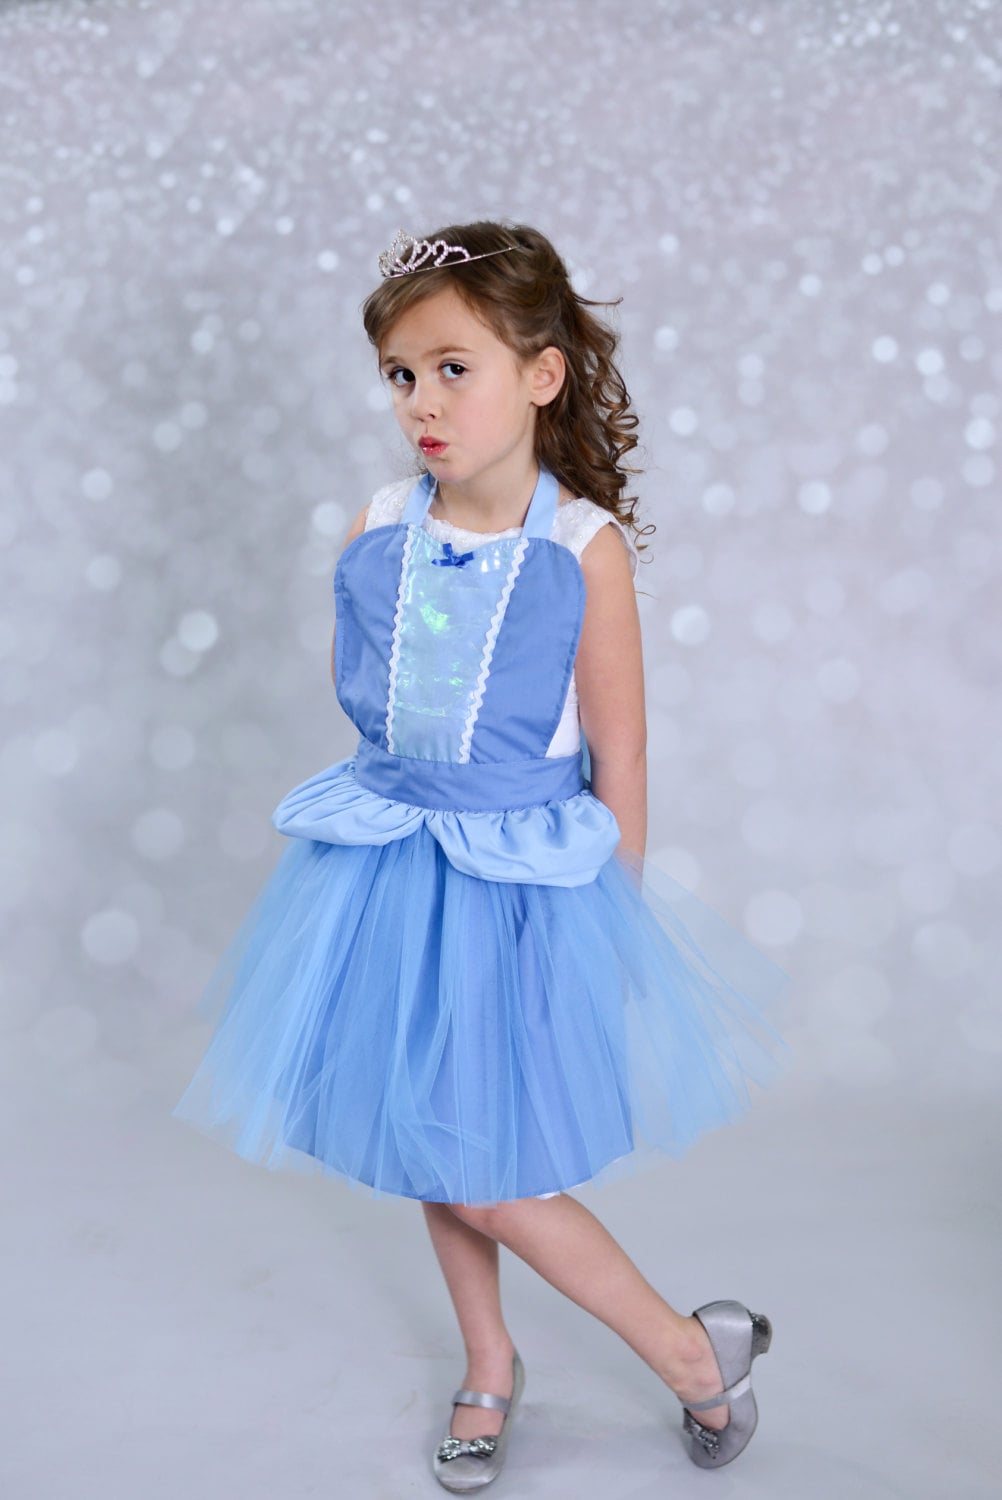 CINDERELLA apron girl Cinderella apron with TUTU apron dress